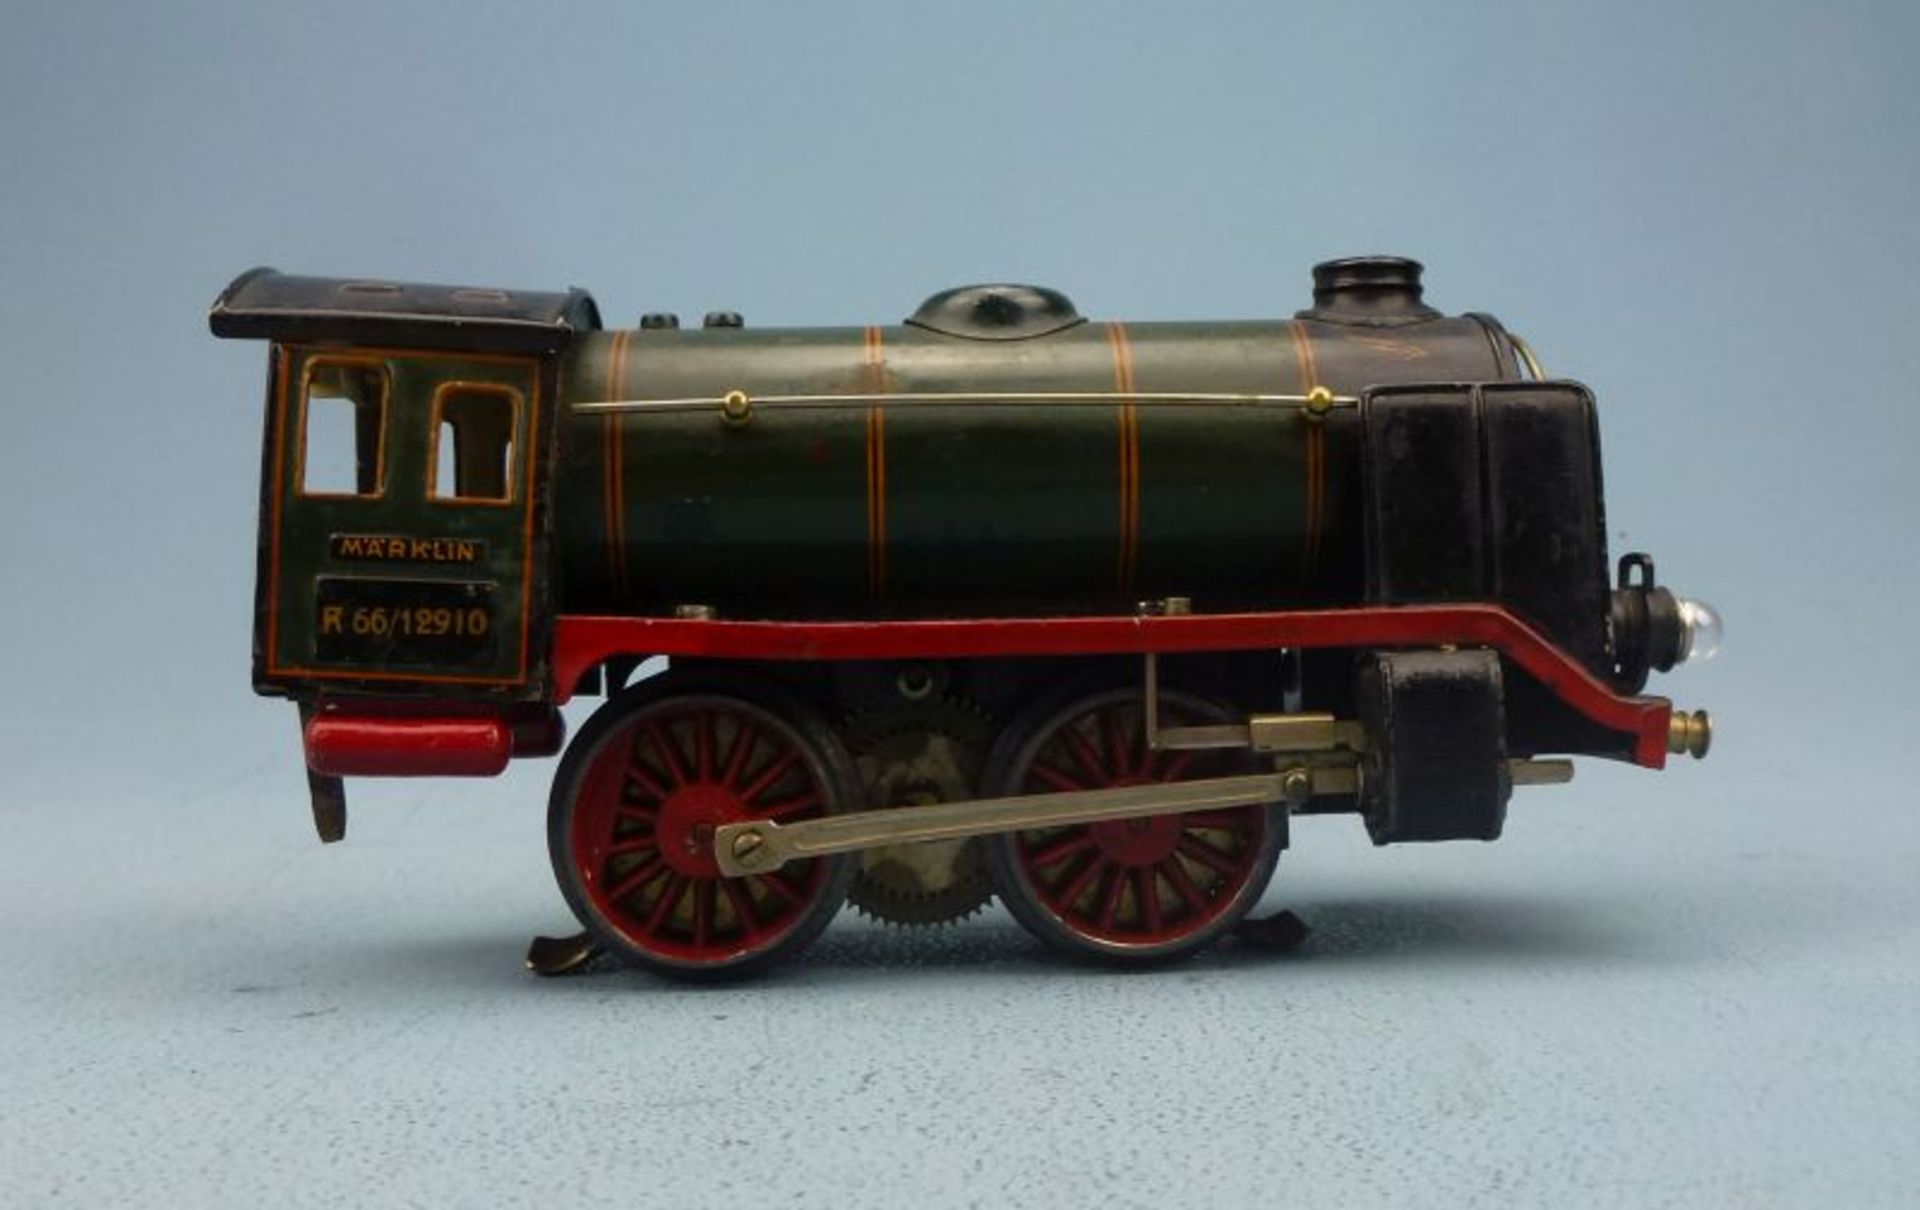 Dampflokomotive R 66/12910, Märklin, 1930er Jahre< - Bild 2 aus 6